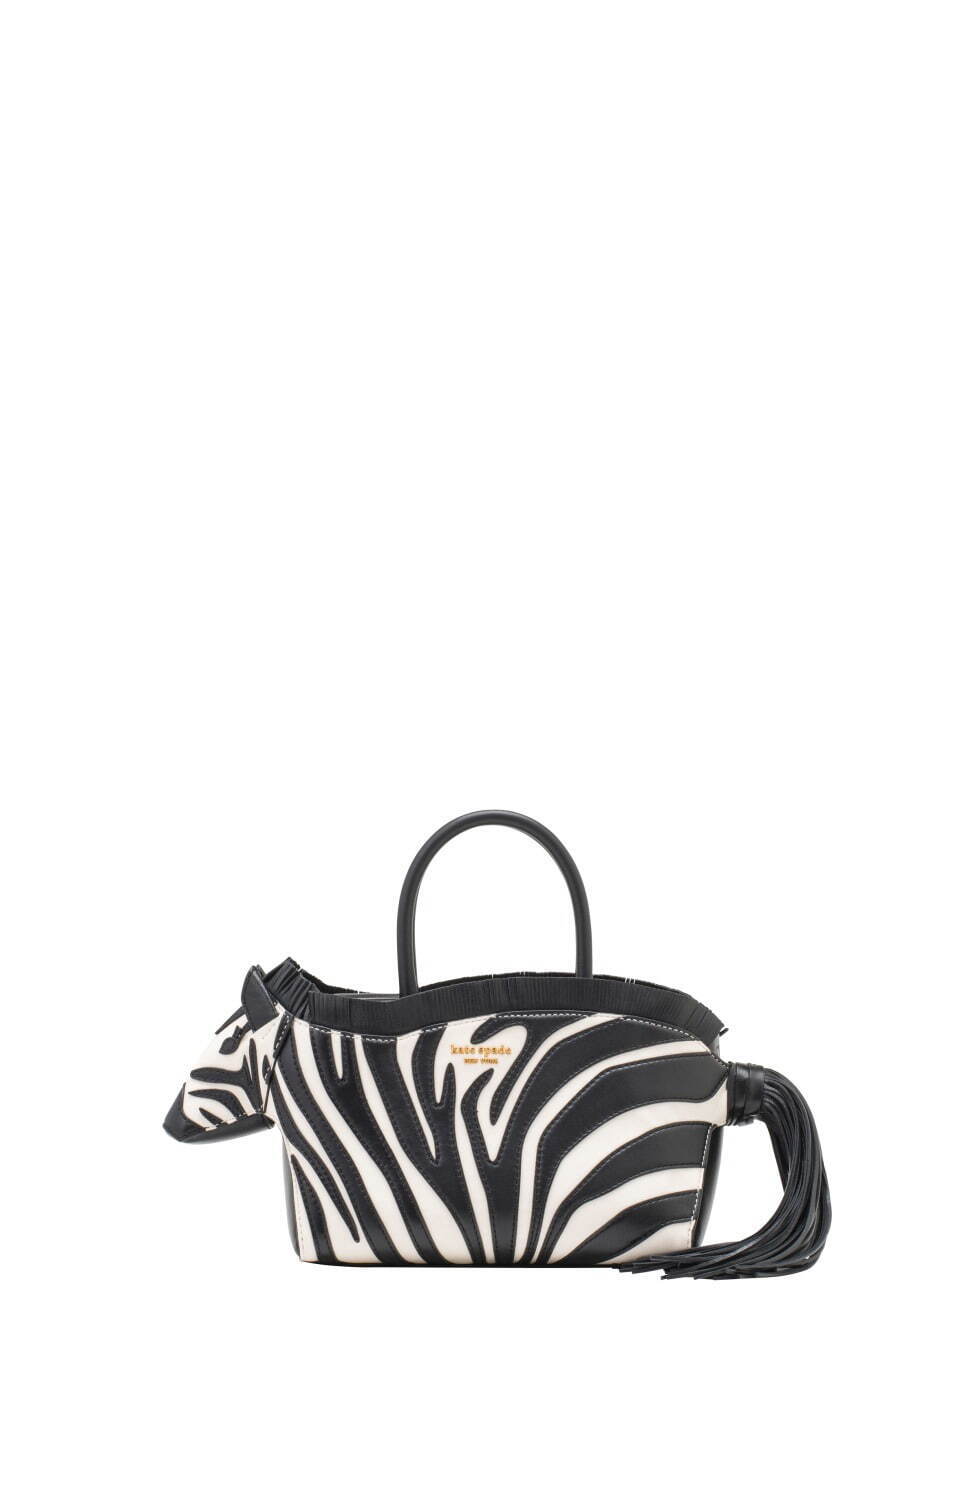 ziggy smooth leather 3d zebra satchel 72,600円
※11月末発売予定